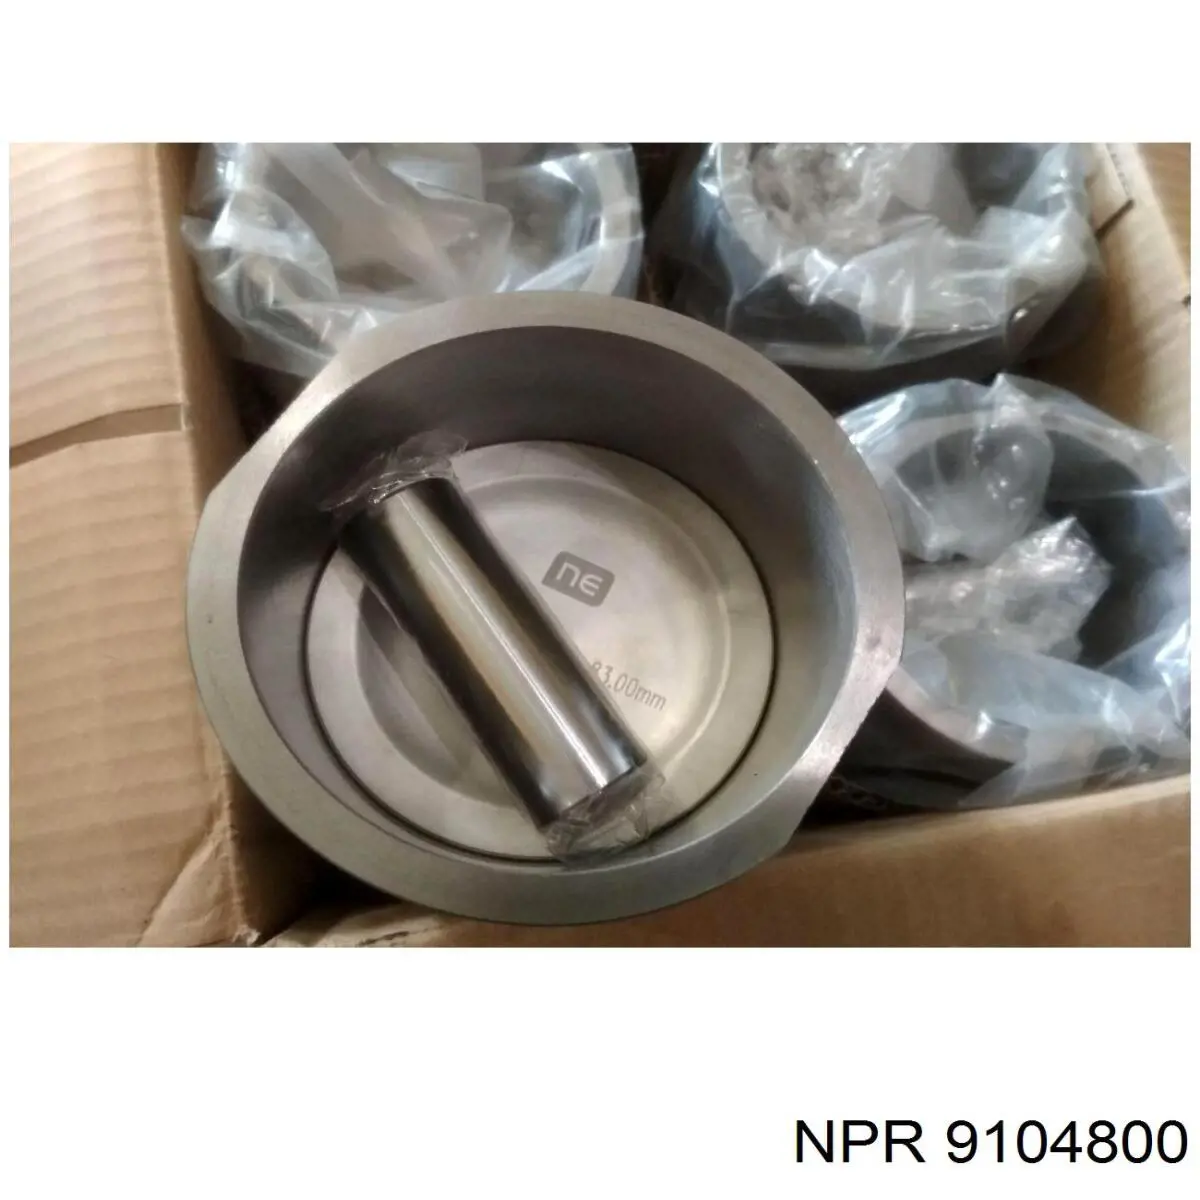 9104800 NE/NPR aros de pistón para 1 cilindro, std